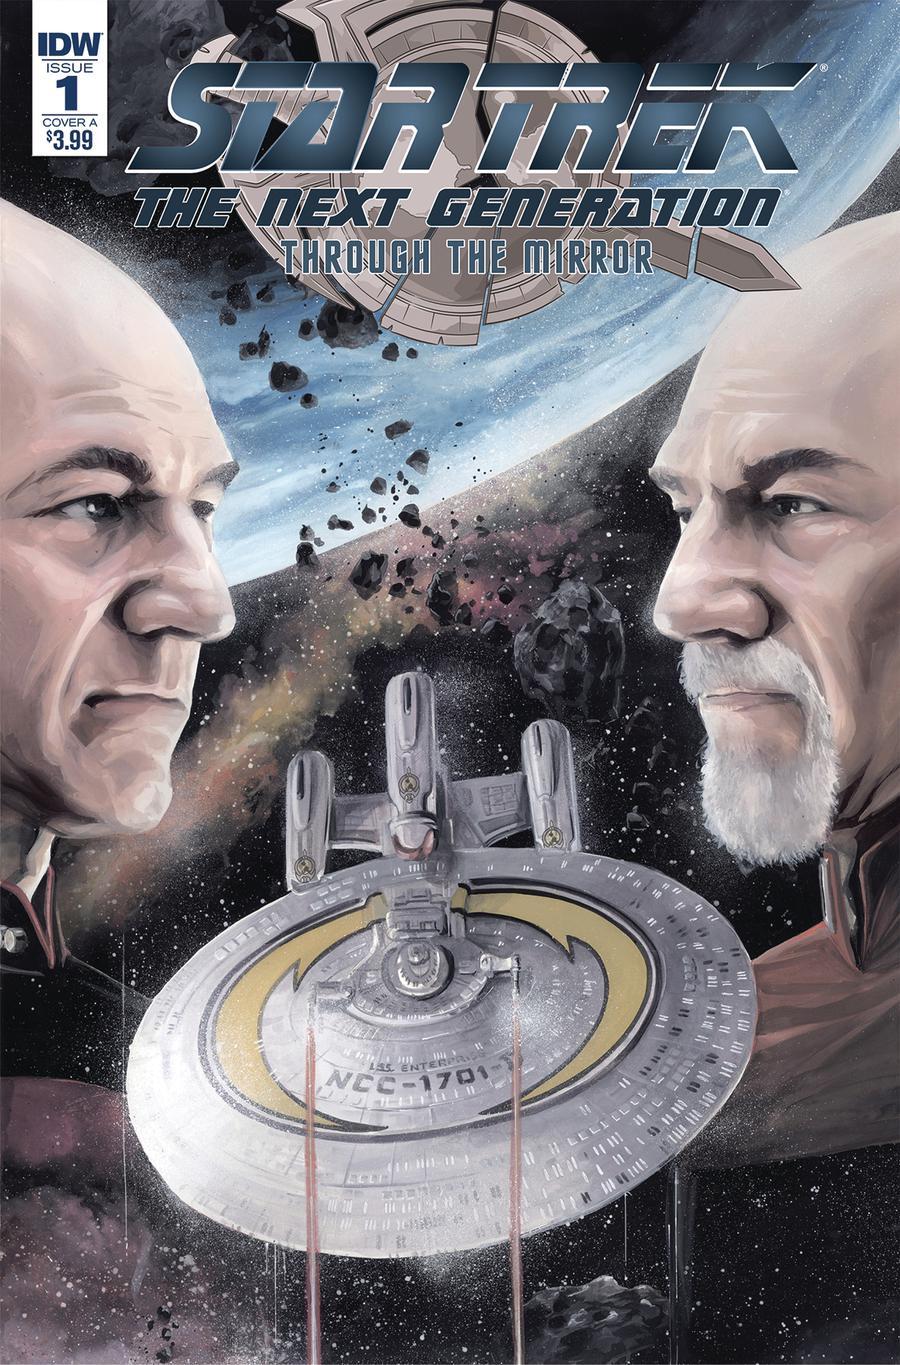 Star Trek The Next Generation Through The Mirror Vol. 1 #1